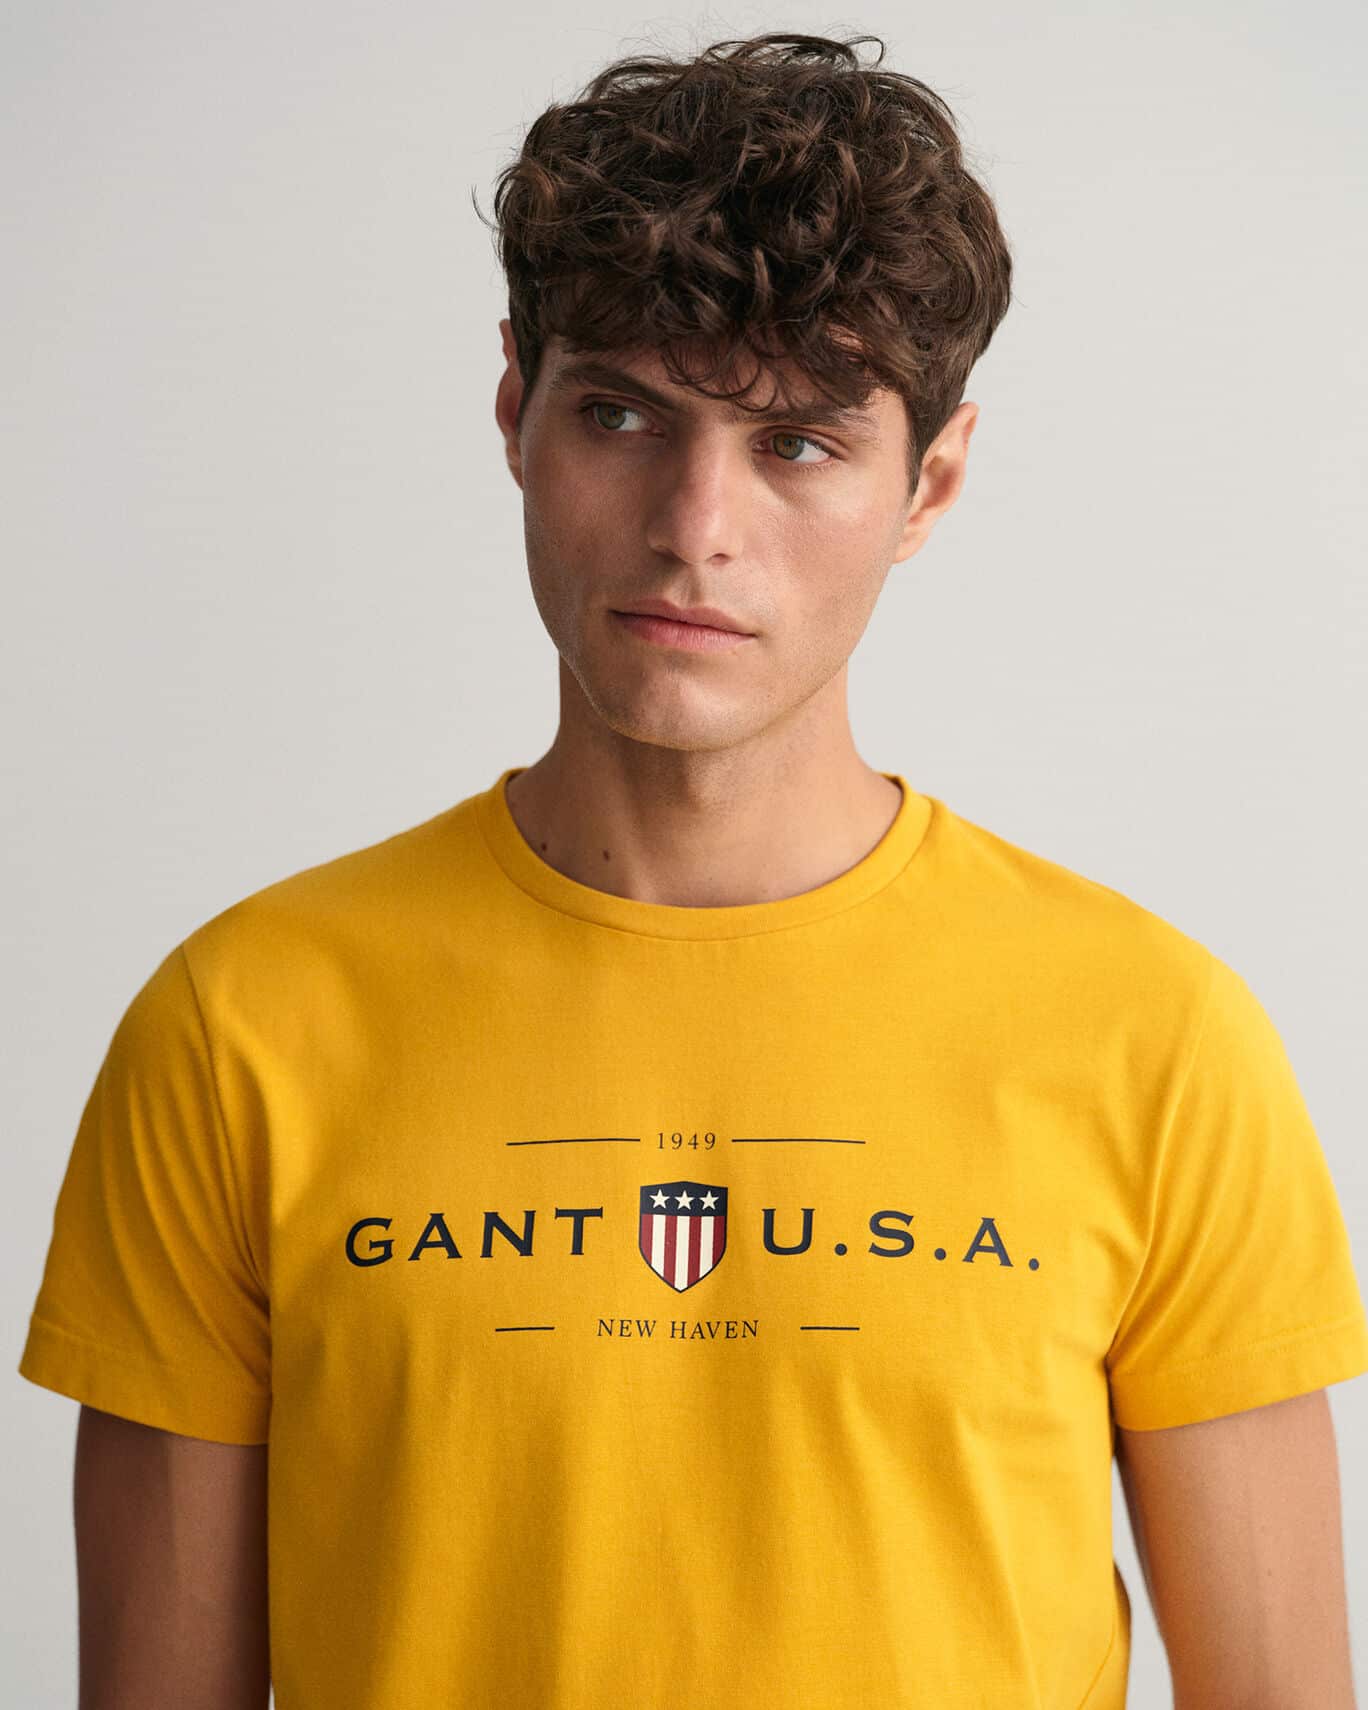 Buy Gant Banner Gold Shield Ivy Scandinavian Fashion - T-shirt Store